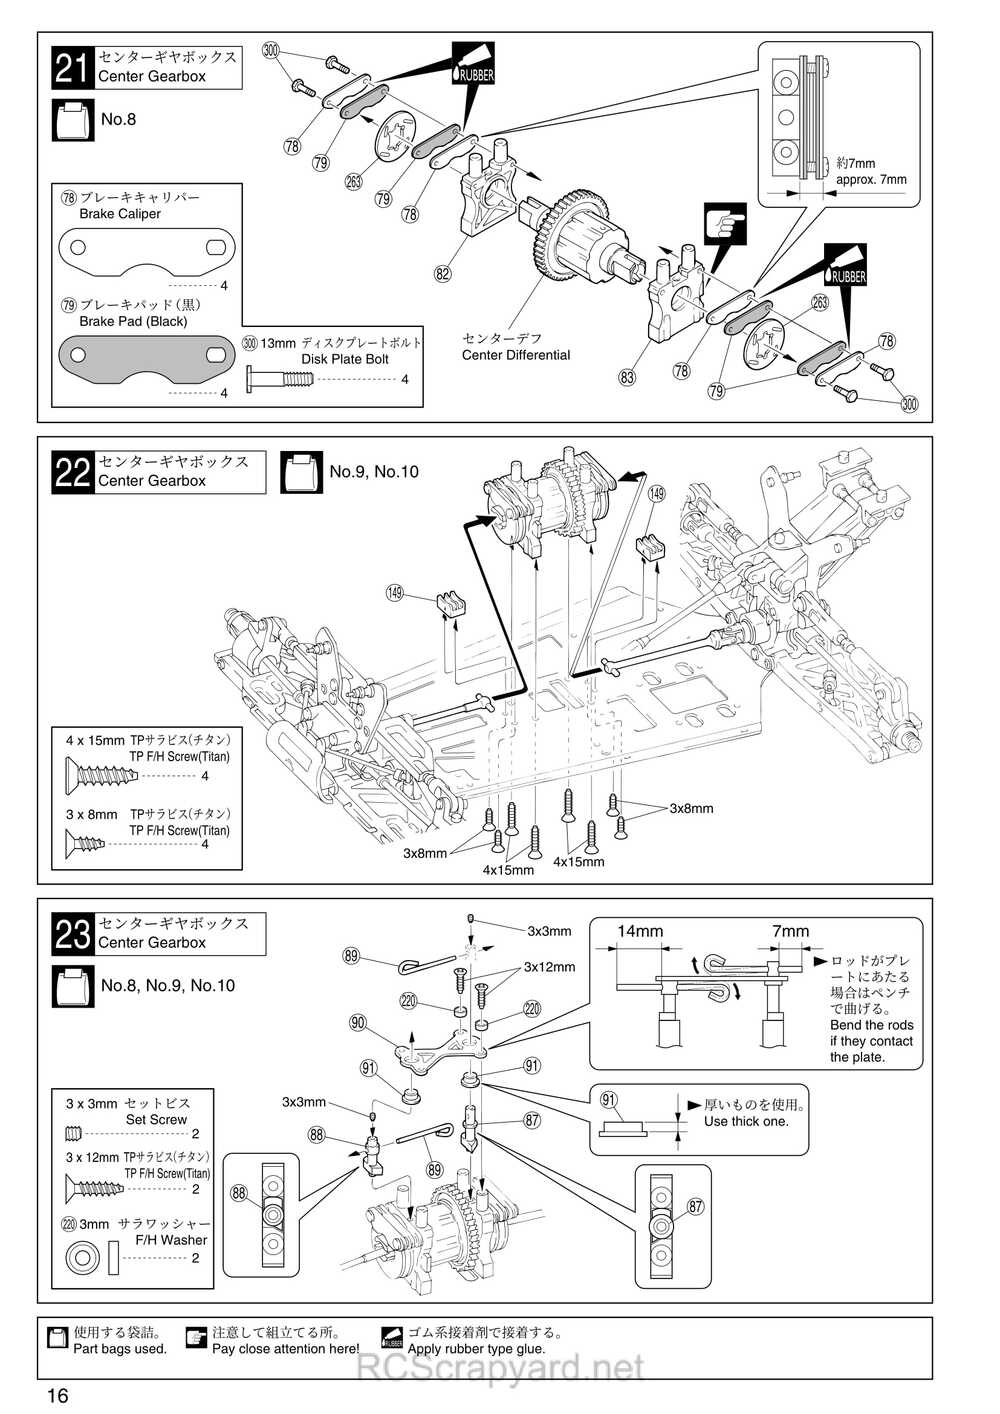 Kyosho - 31273 - Inferno-MP-7-5-Yuichi3 - Manual - Page 16